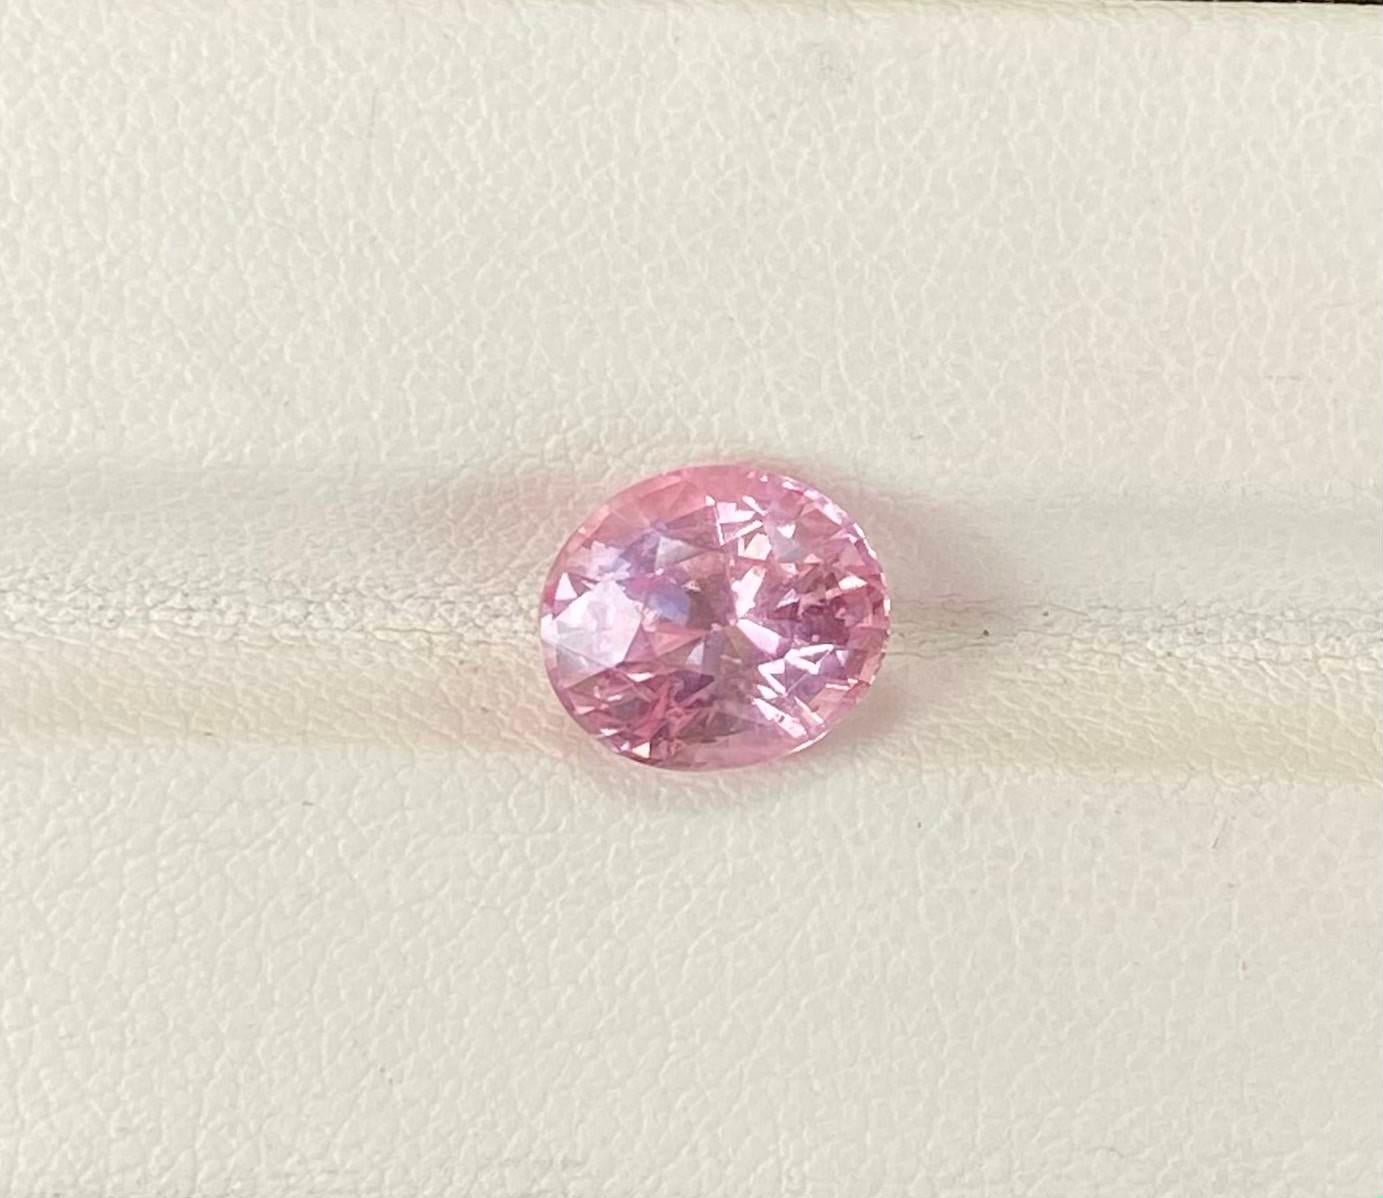 Ceylon padparadscha sapphire 3.68 Carats unheated

• Variety: Sapphire
• Origin: Sri Lanka (Ceylon)
• Color(s): slightly orangish pink
• Shape/Cutting Style: Oval
• Cut: mix
• Dimensions: 9.18mm x 7.91mm x 6.42mm
• Calibrated: No
• Clarity Grade: